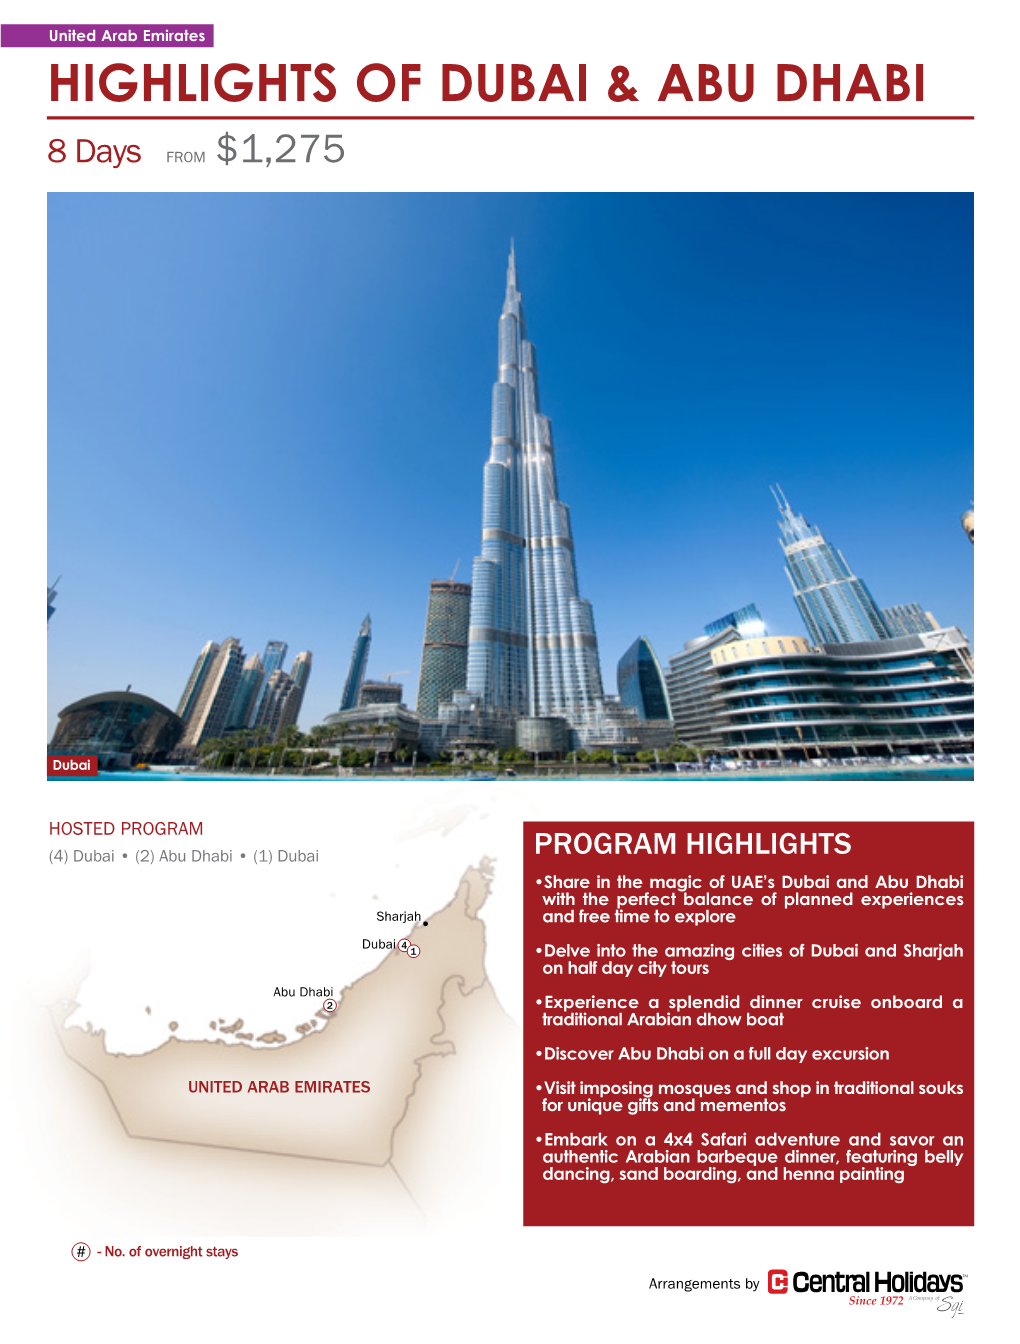 Highlights of Dubai & Abu Dhabi